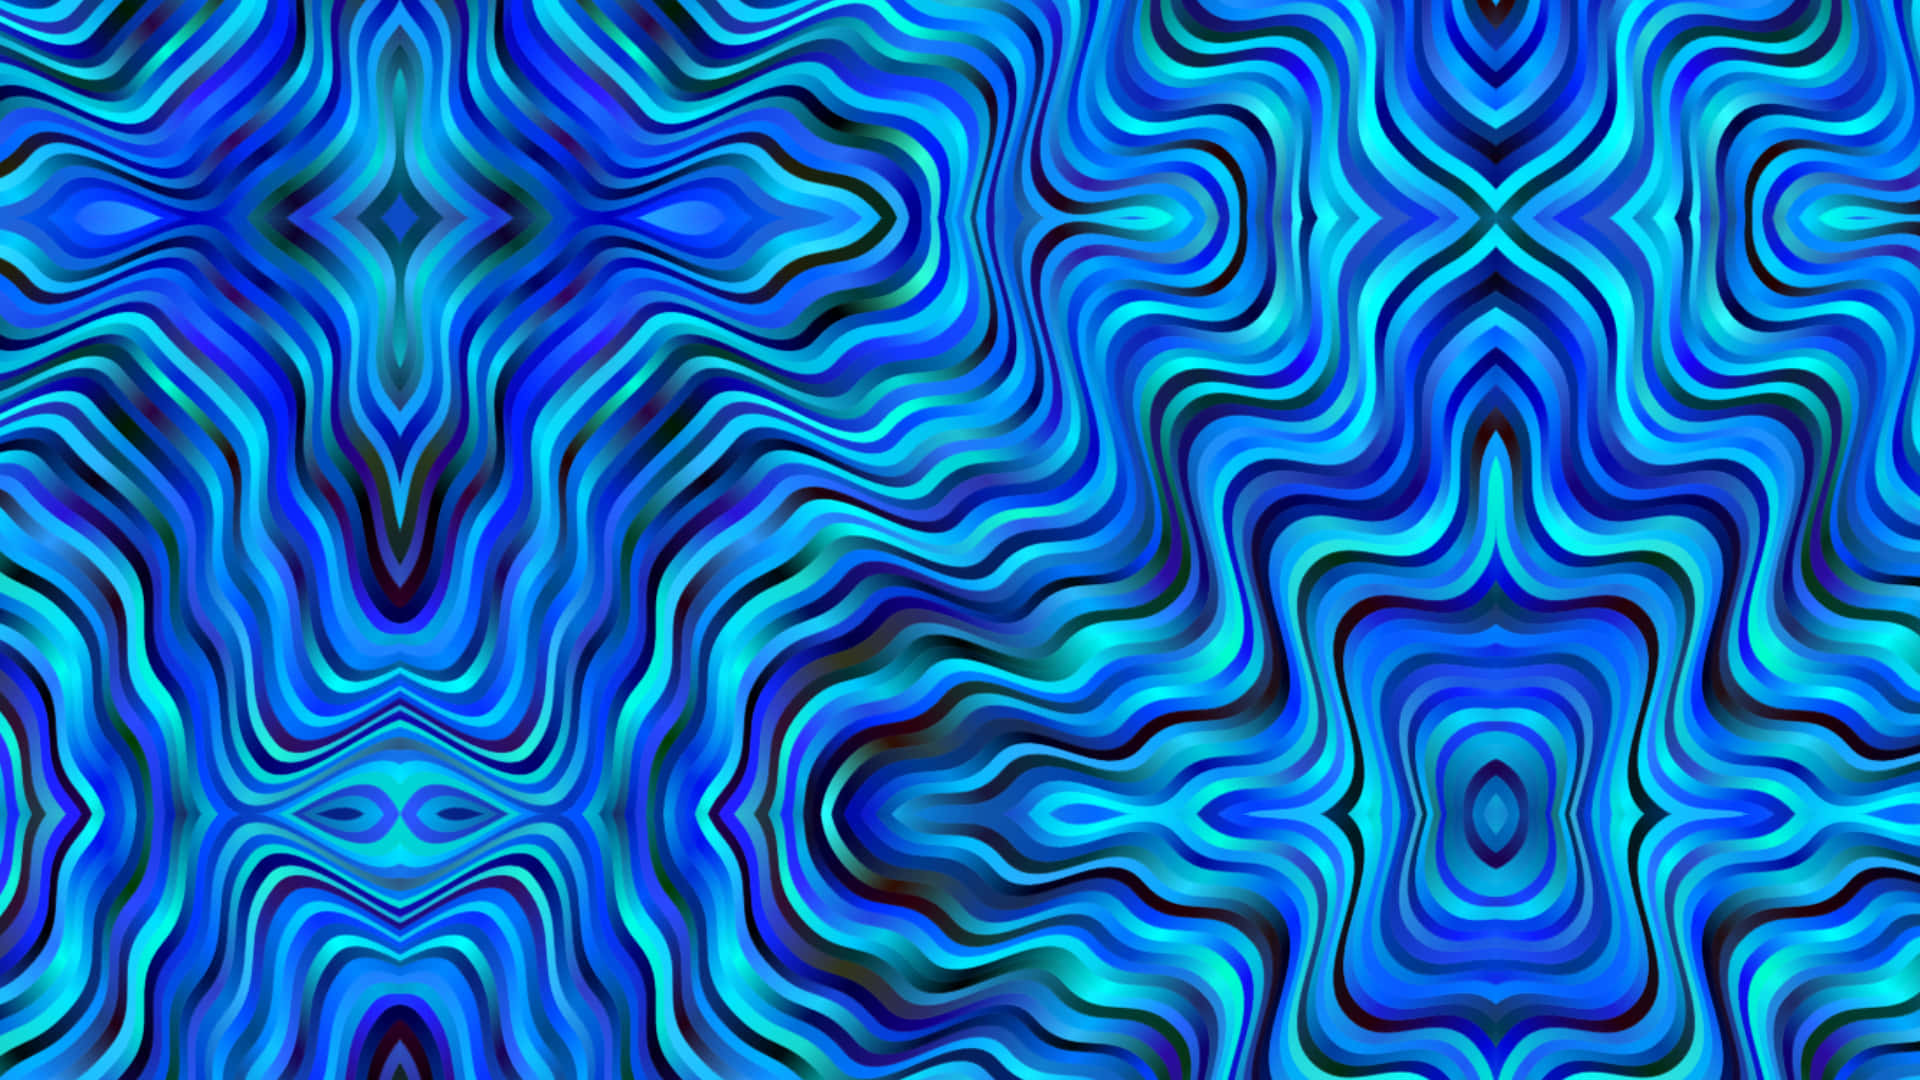 A Blue And Black Swirl Pattern Wallpaper